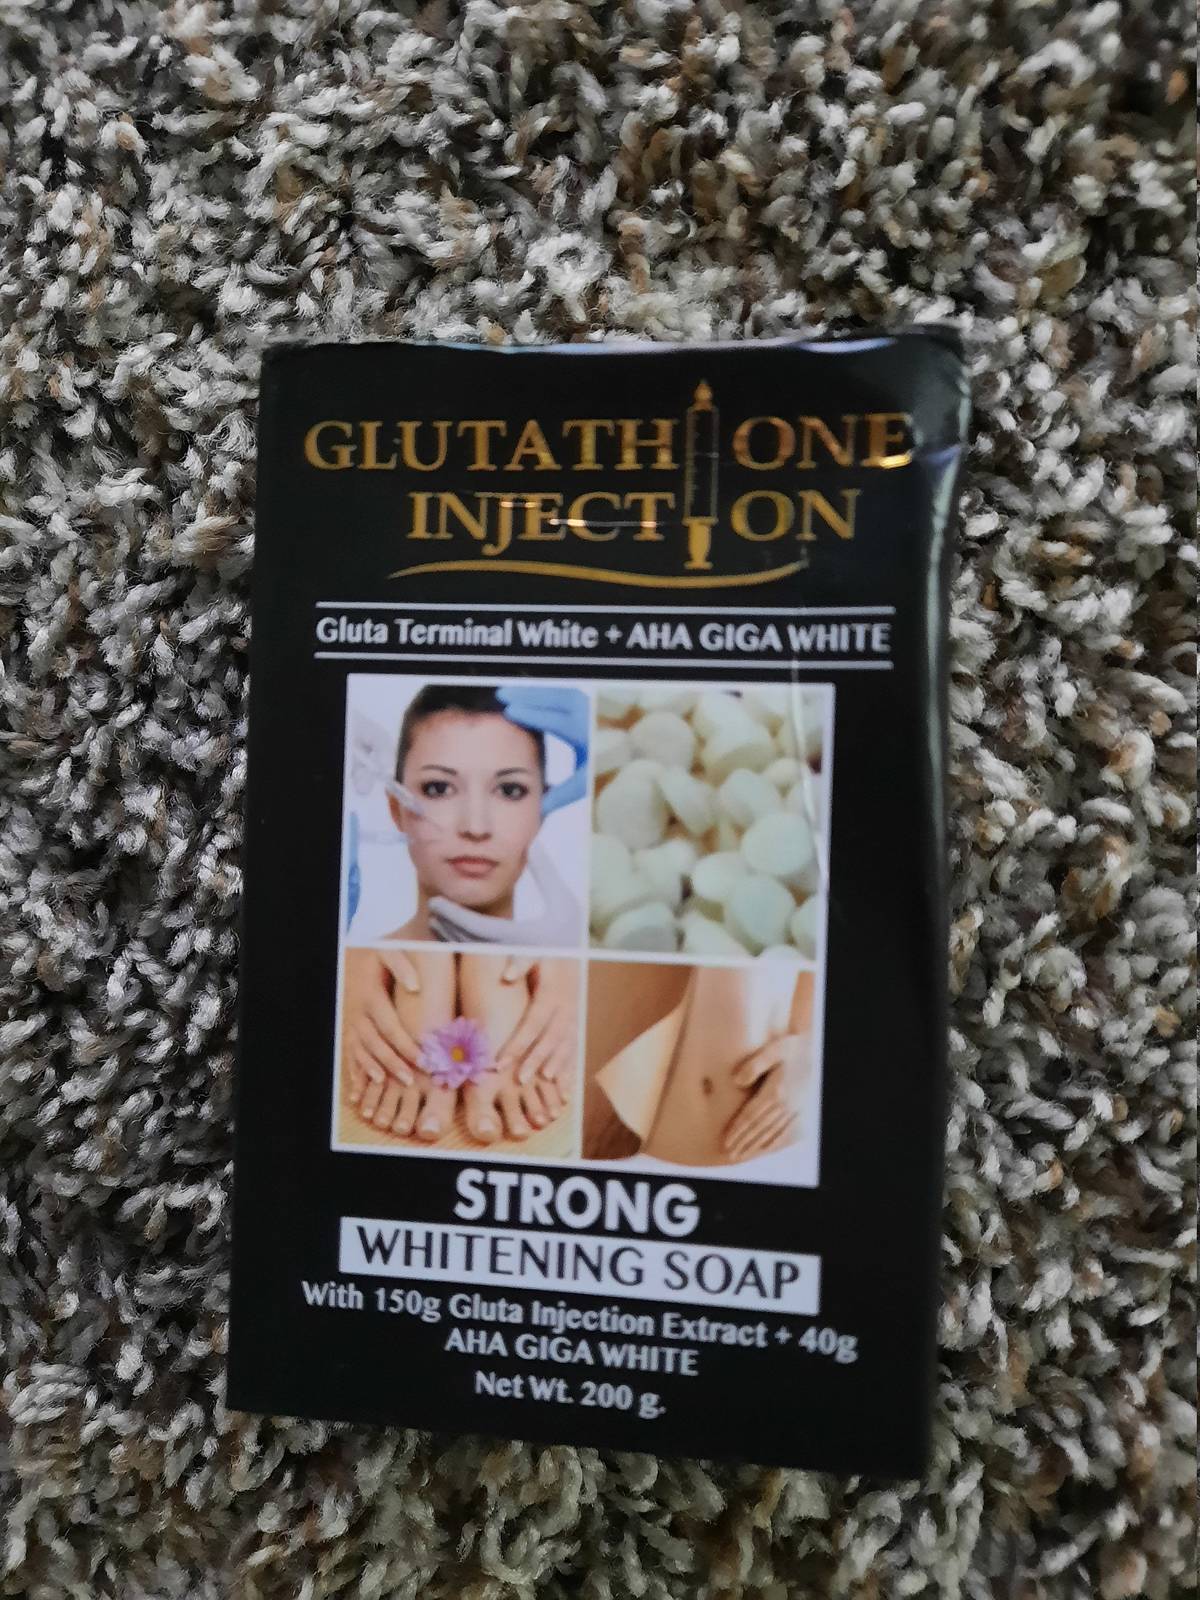 Glutathione injection strong whitening soap+ AHA GIGA WHITE